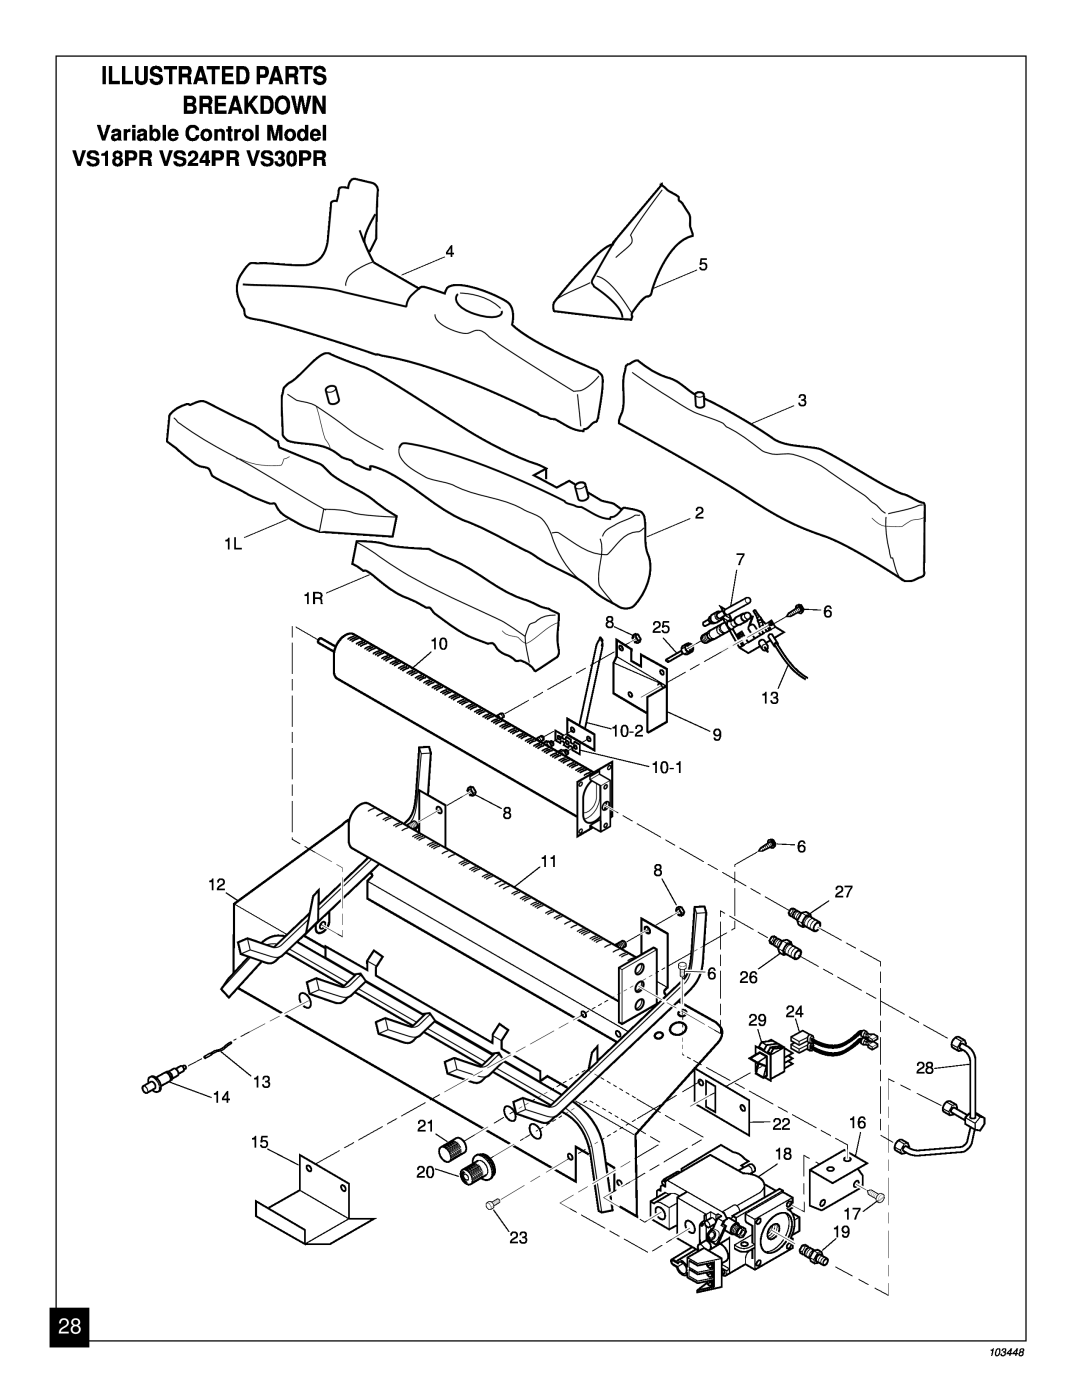 Vanguard Heating installation manual Breakdown, Illustrated Parts, Variable Control Model, VS18PR VS24PR VS30PR 